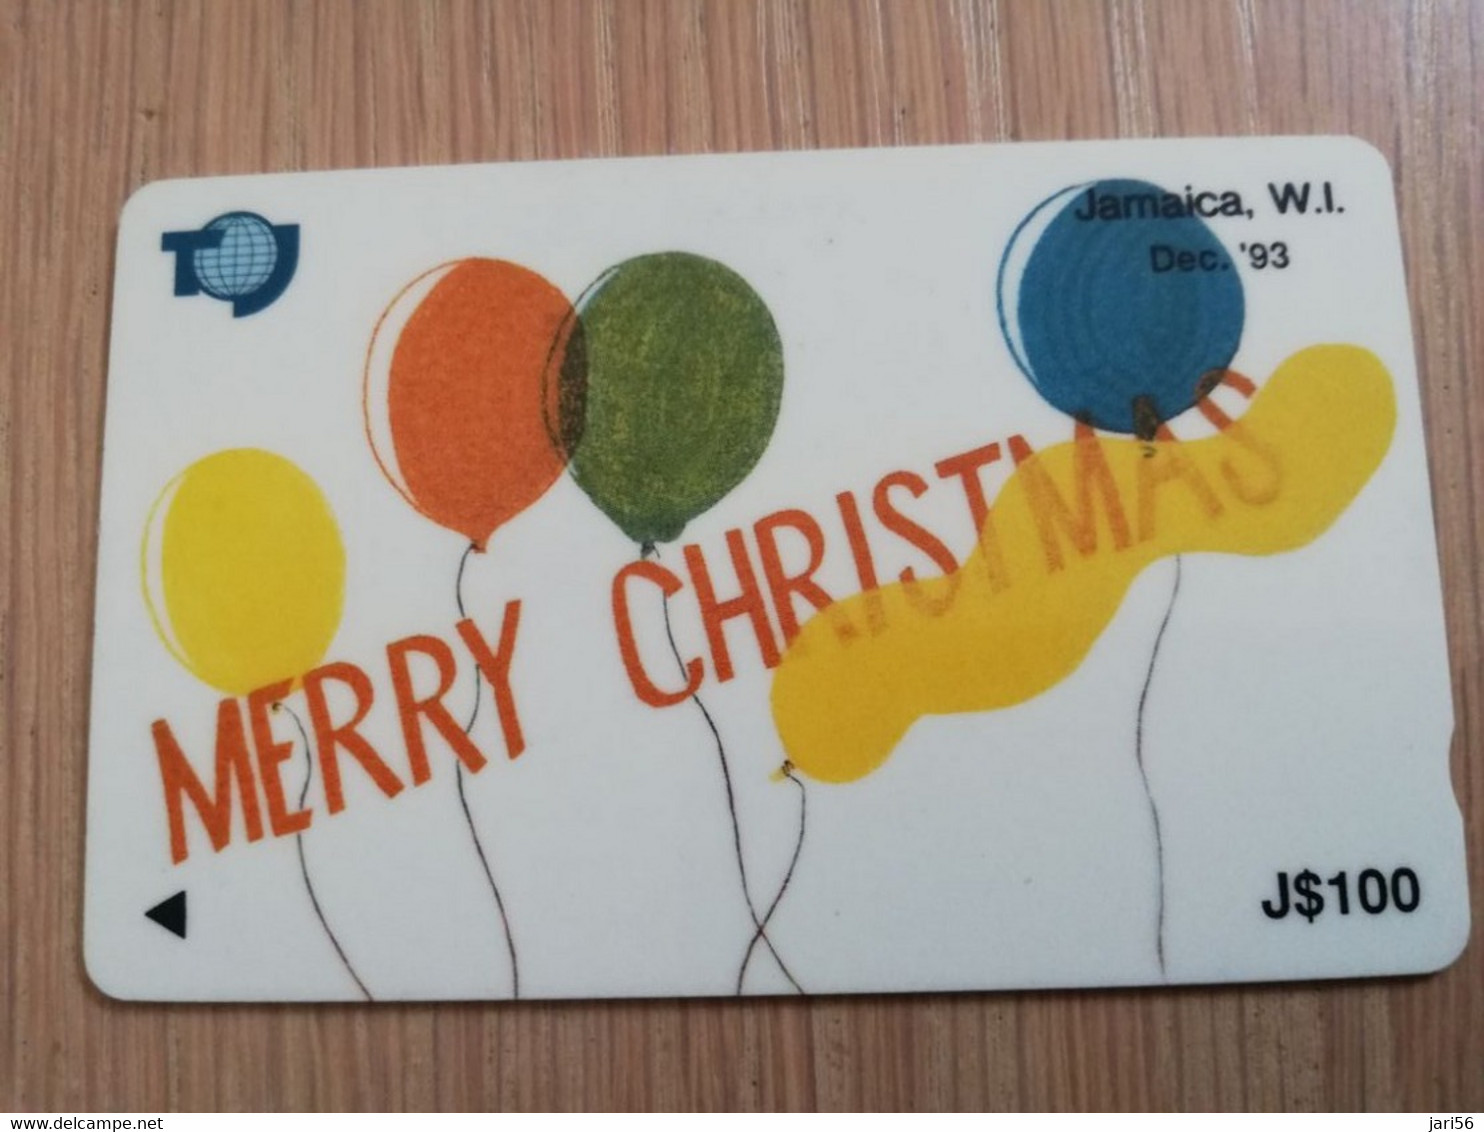 JAMAICA  J$100-  GPT CARD   MERRY CHRISTMAS  CONTROL NR: 16JAMC   Fine Used Card  **3238** - Jamaïque